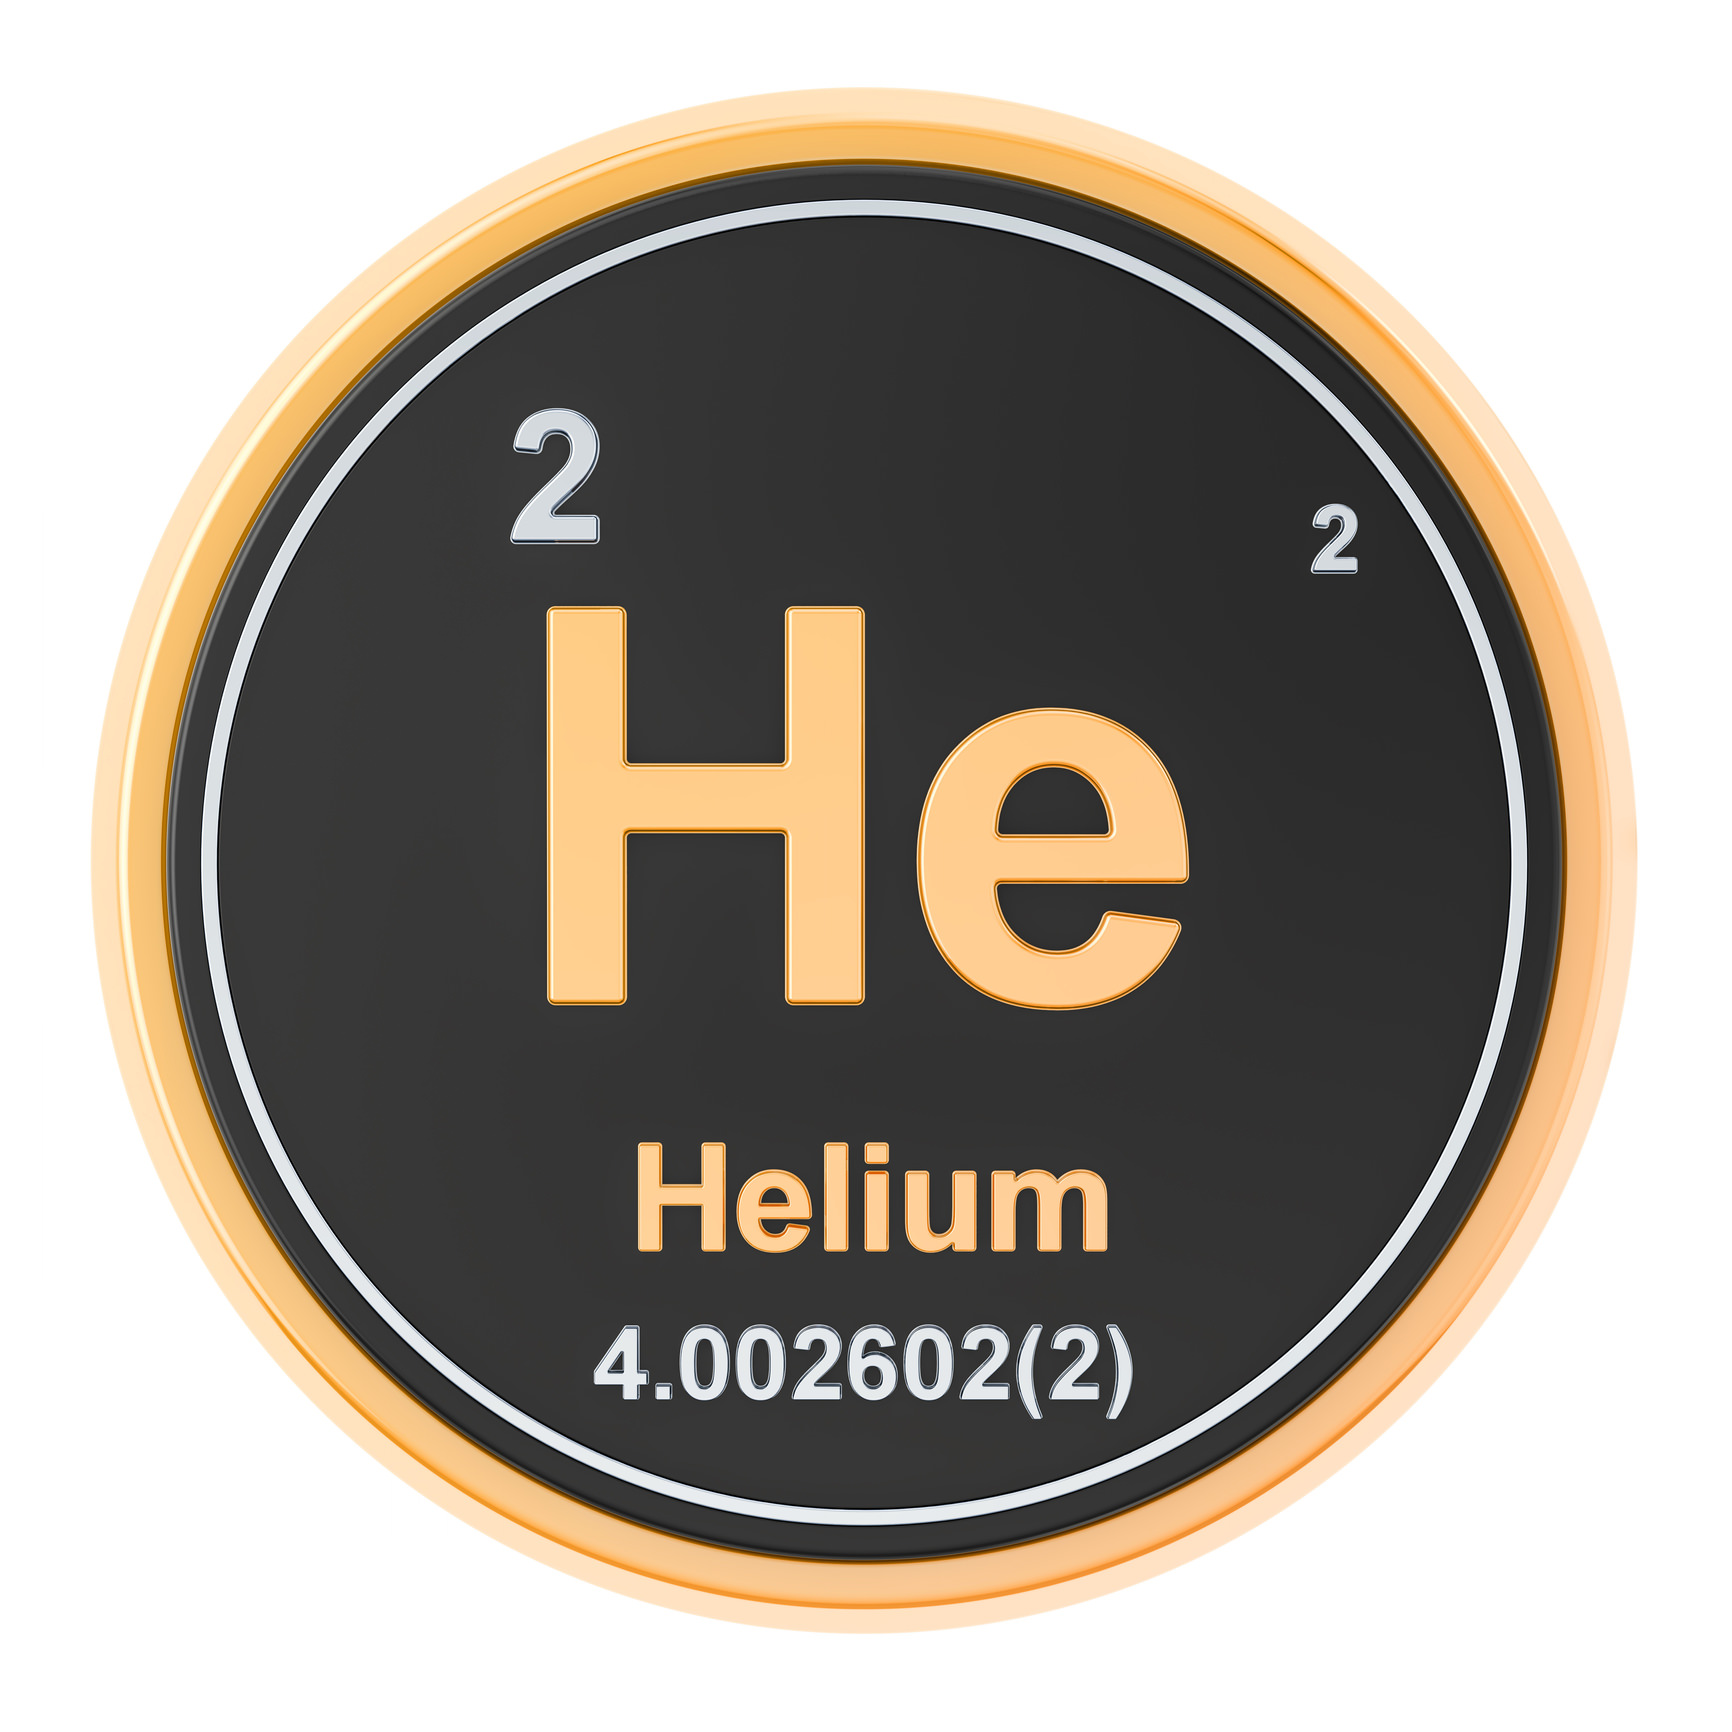 Гелий - Helium - химический элемент